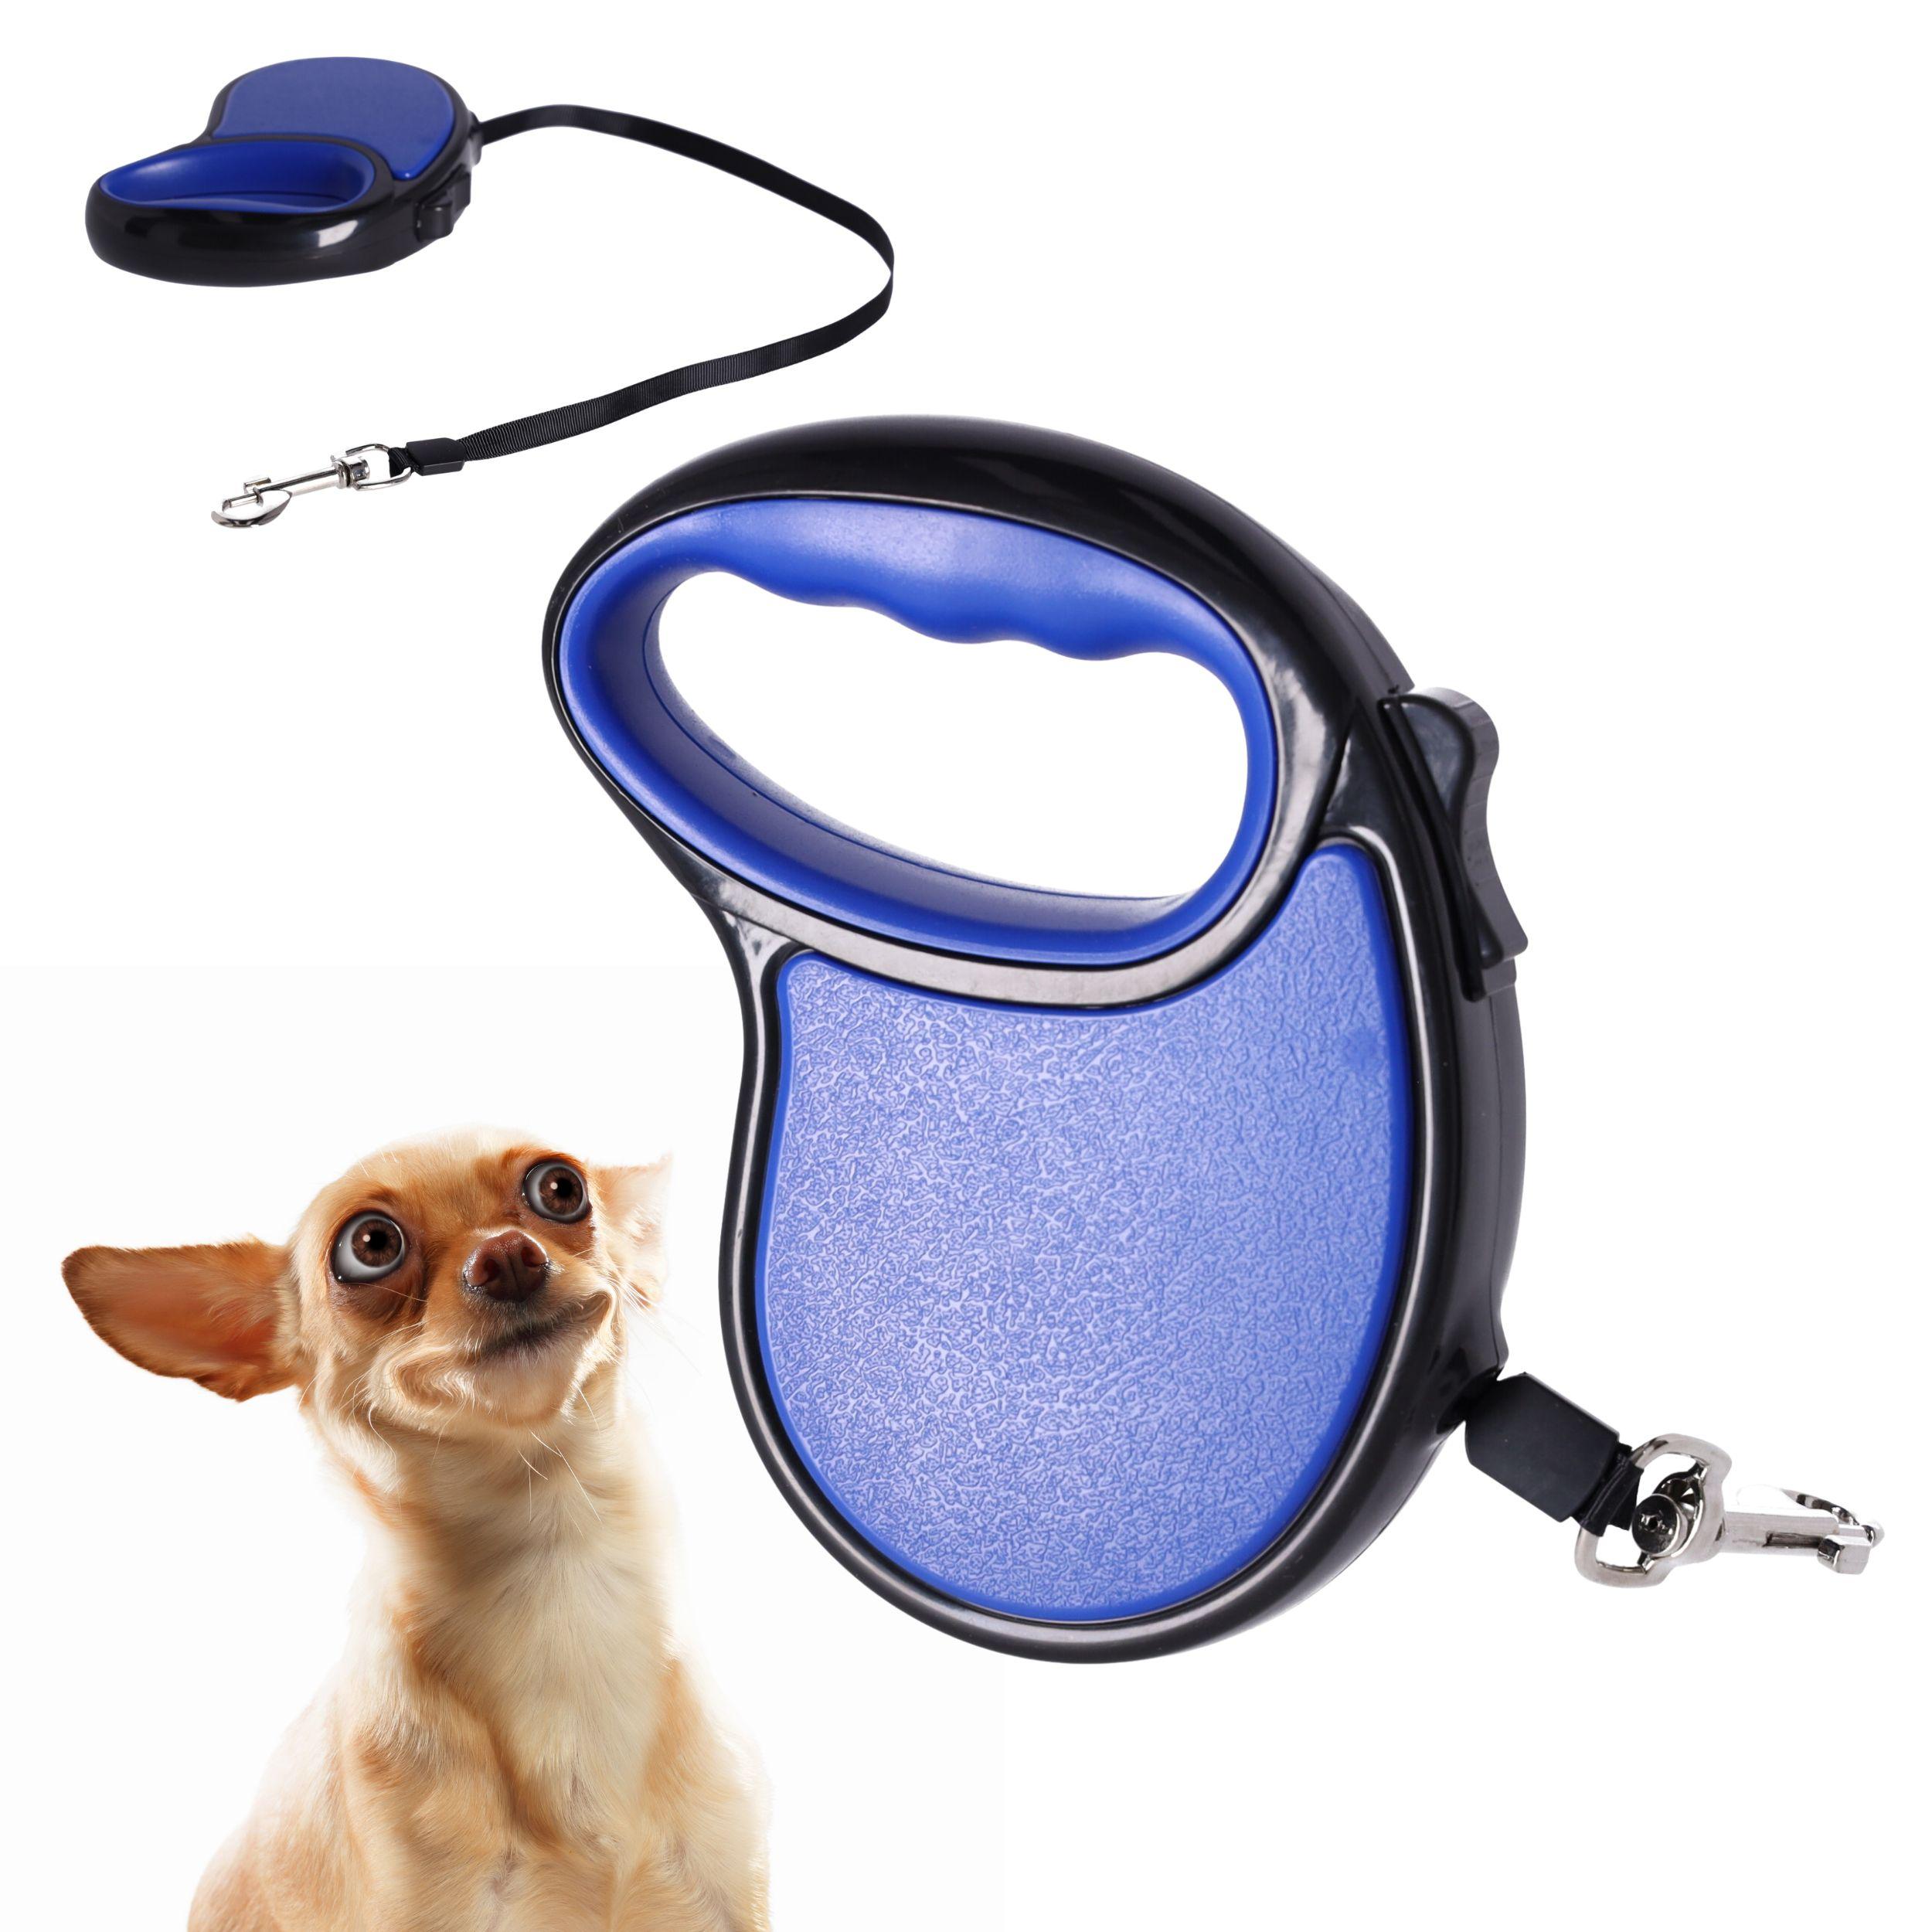 Automatic dog leash / tape leash - size M, mix of colors